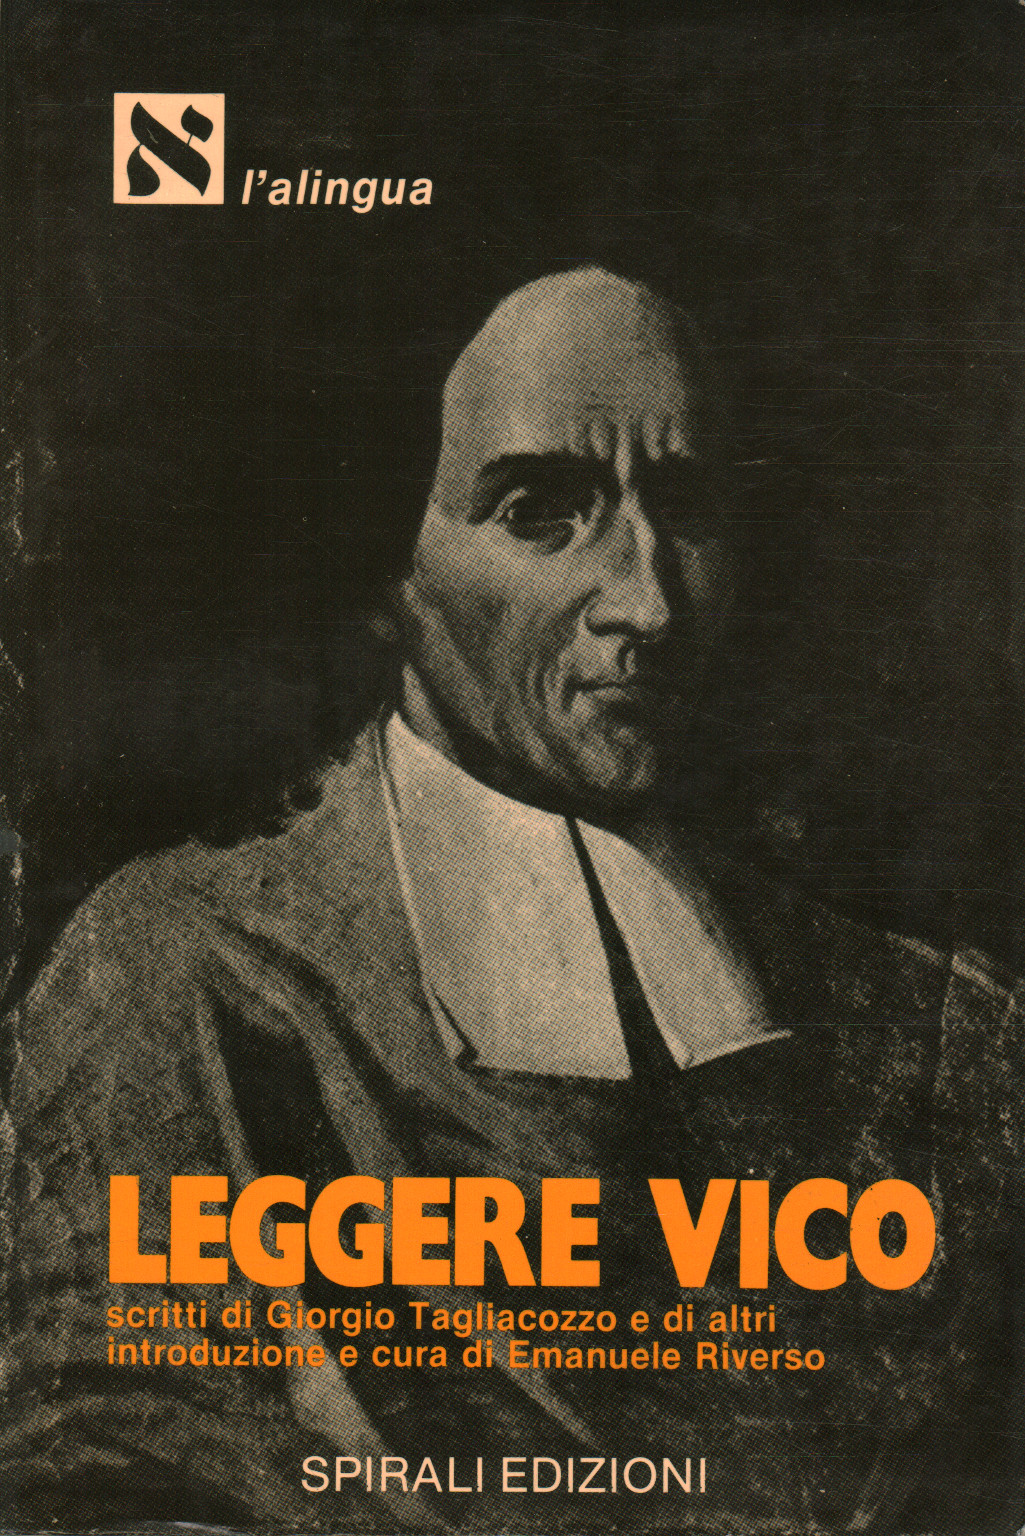 Read Vico, Emanuele Riverso